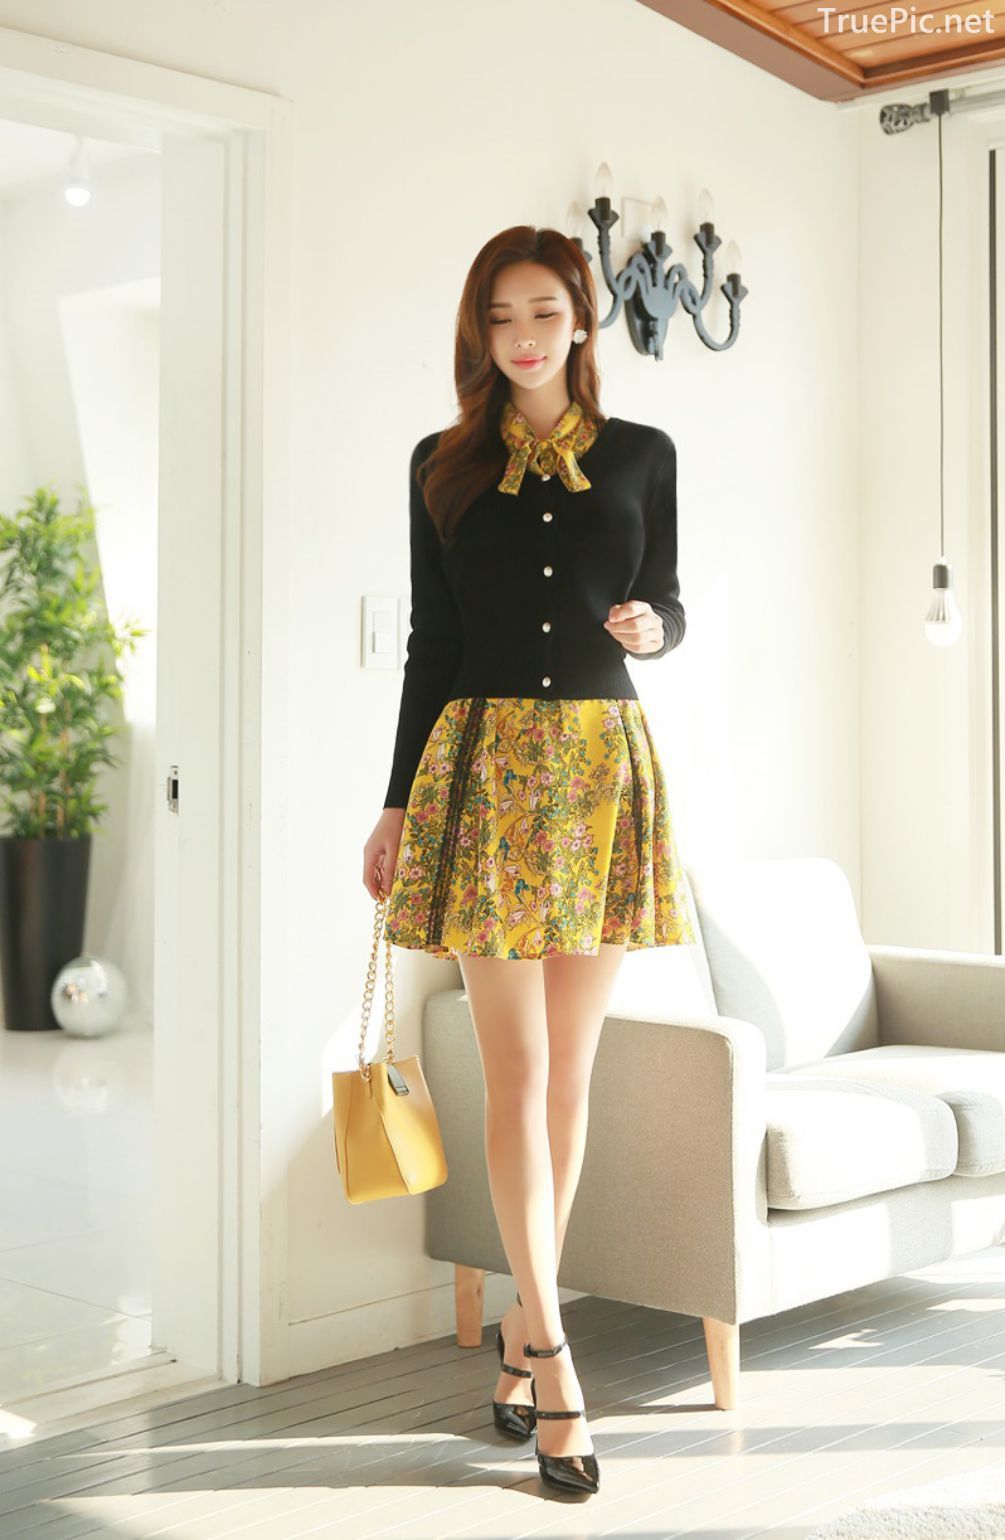 Korean Fashion Model - Park Da Hyun - Indoor Photoshoot Collection - TruePic.net - Picture 21